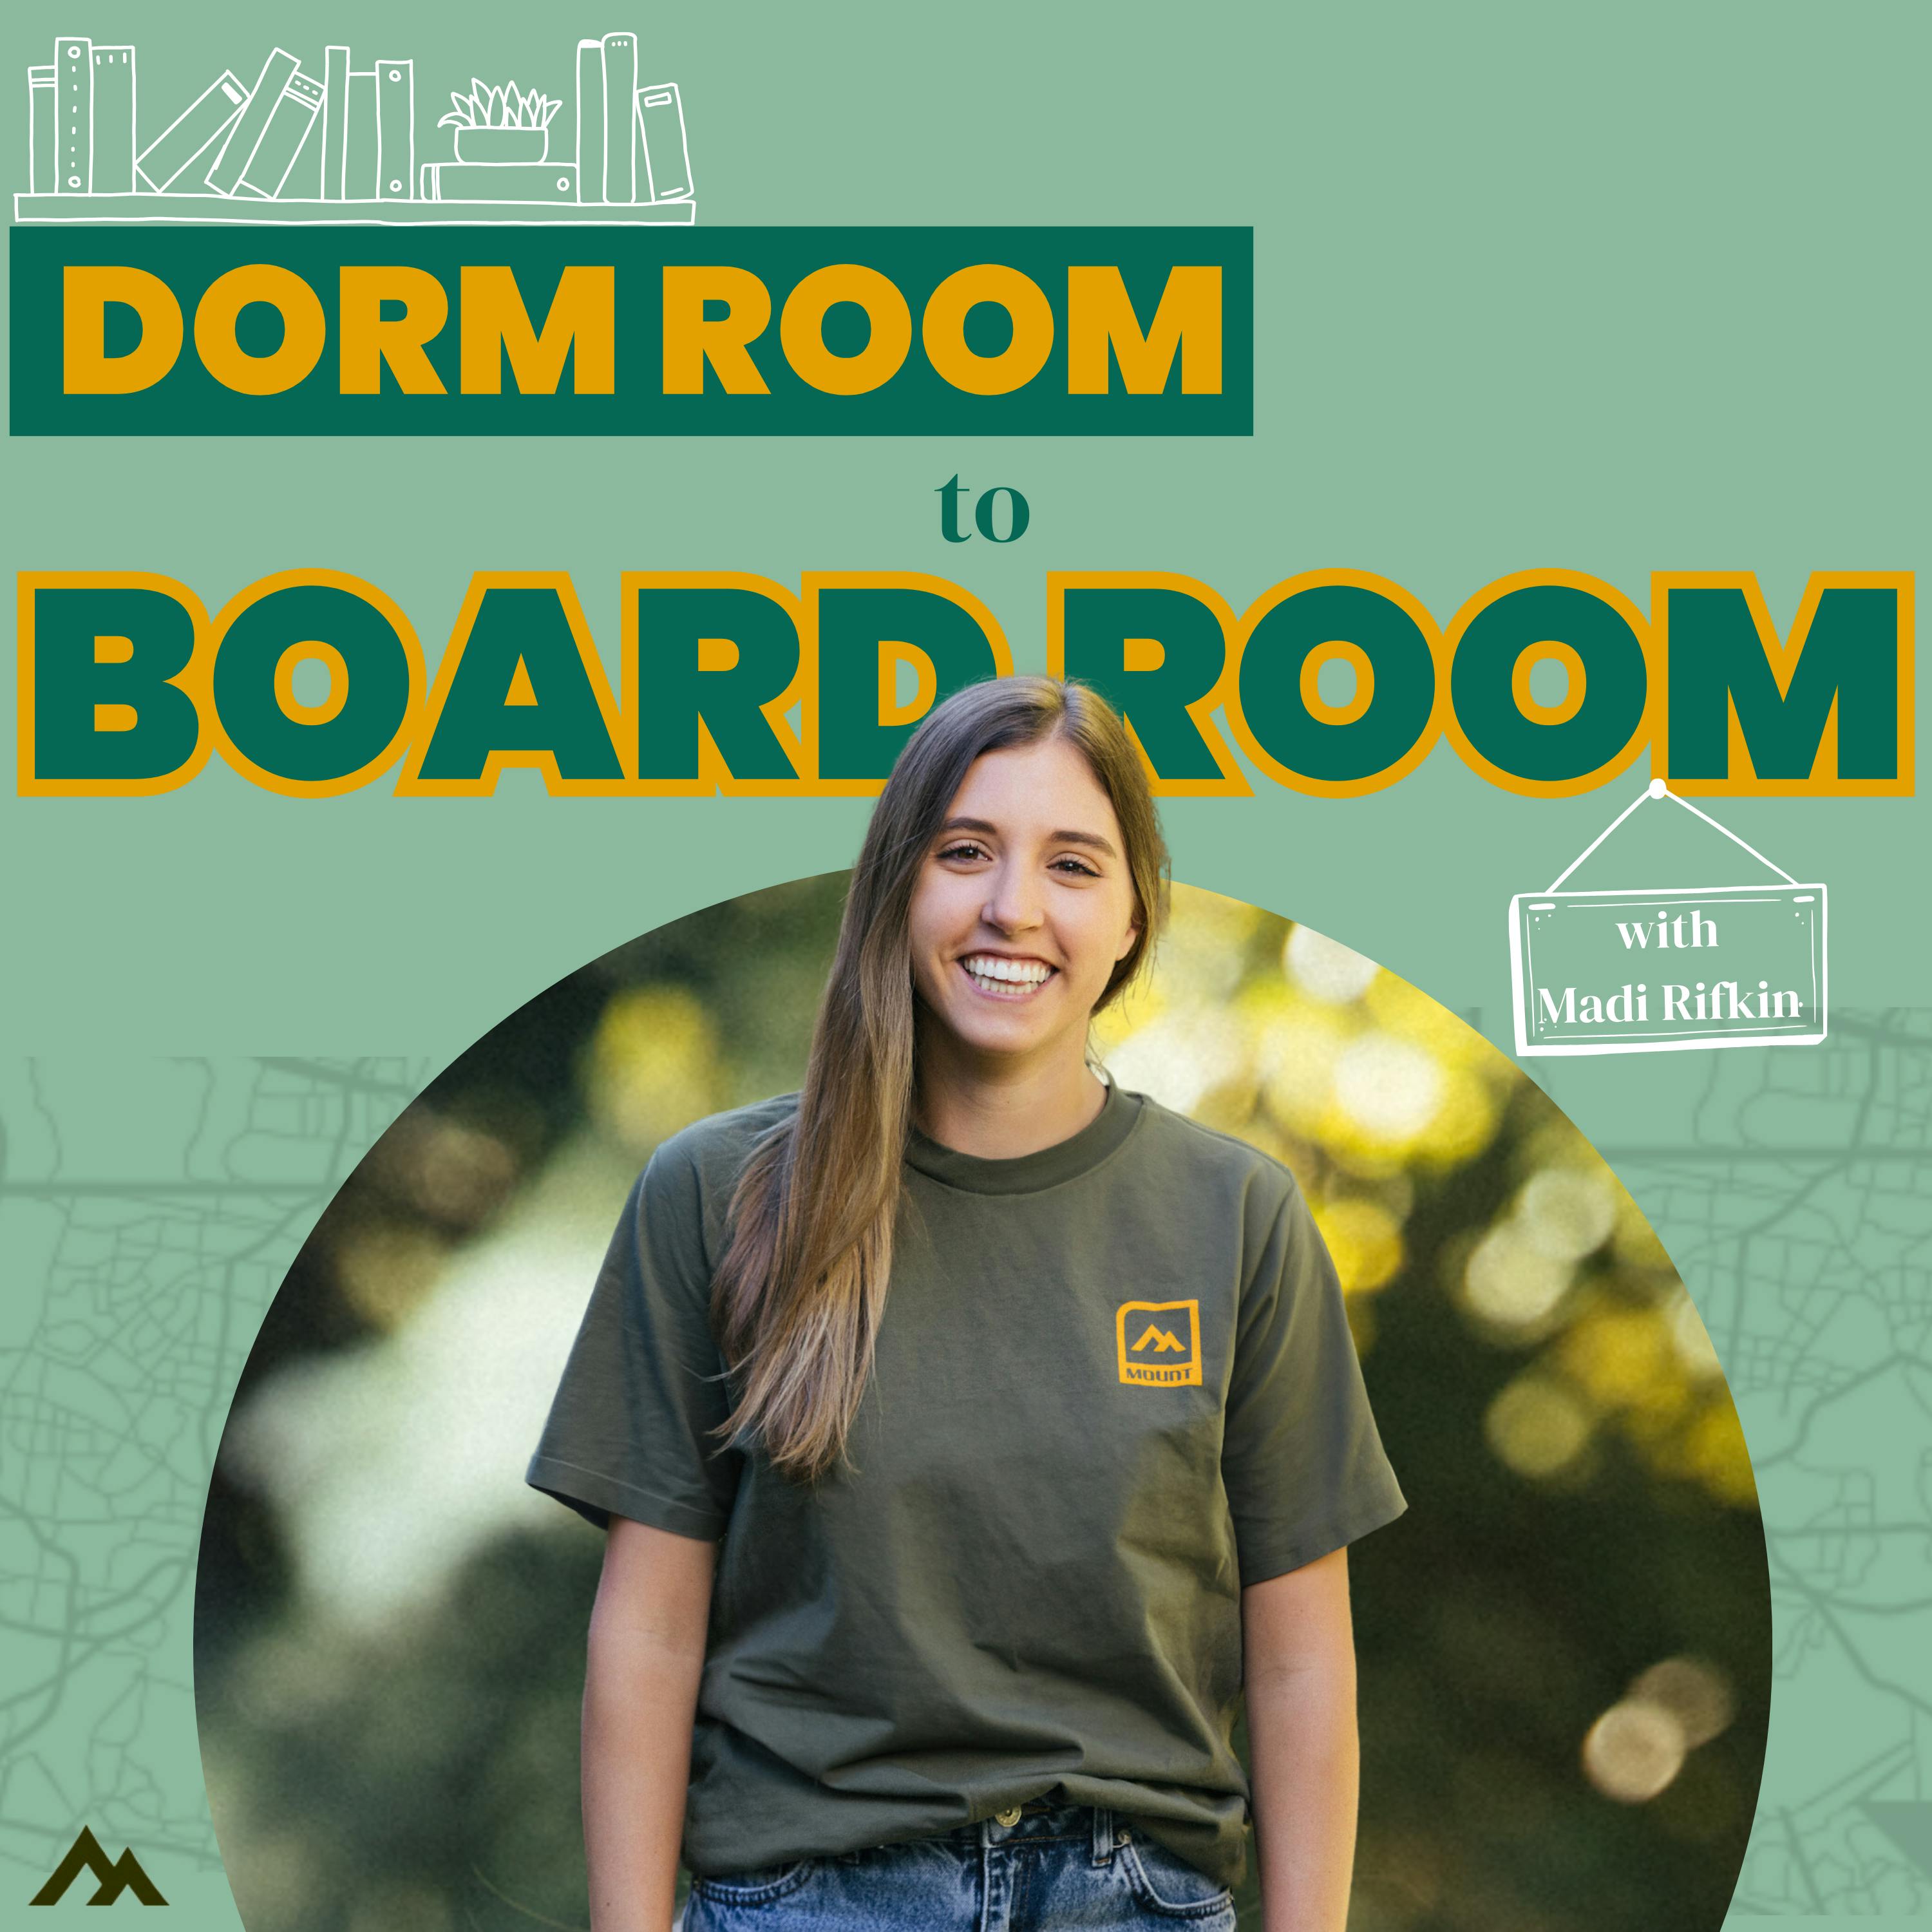 Dorm Room to Board Room Image